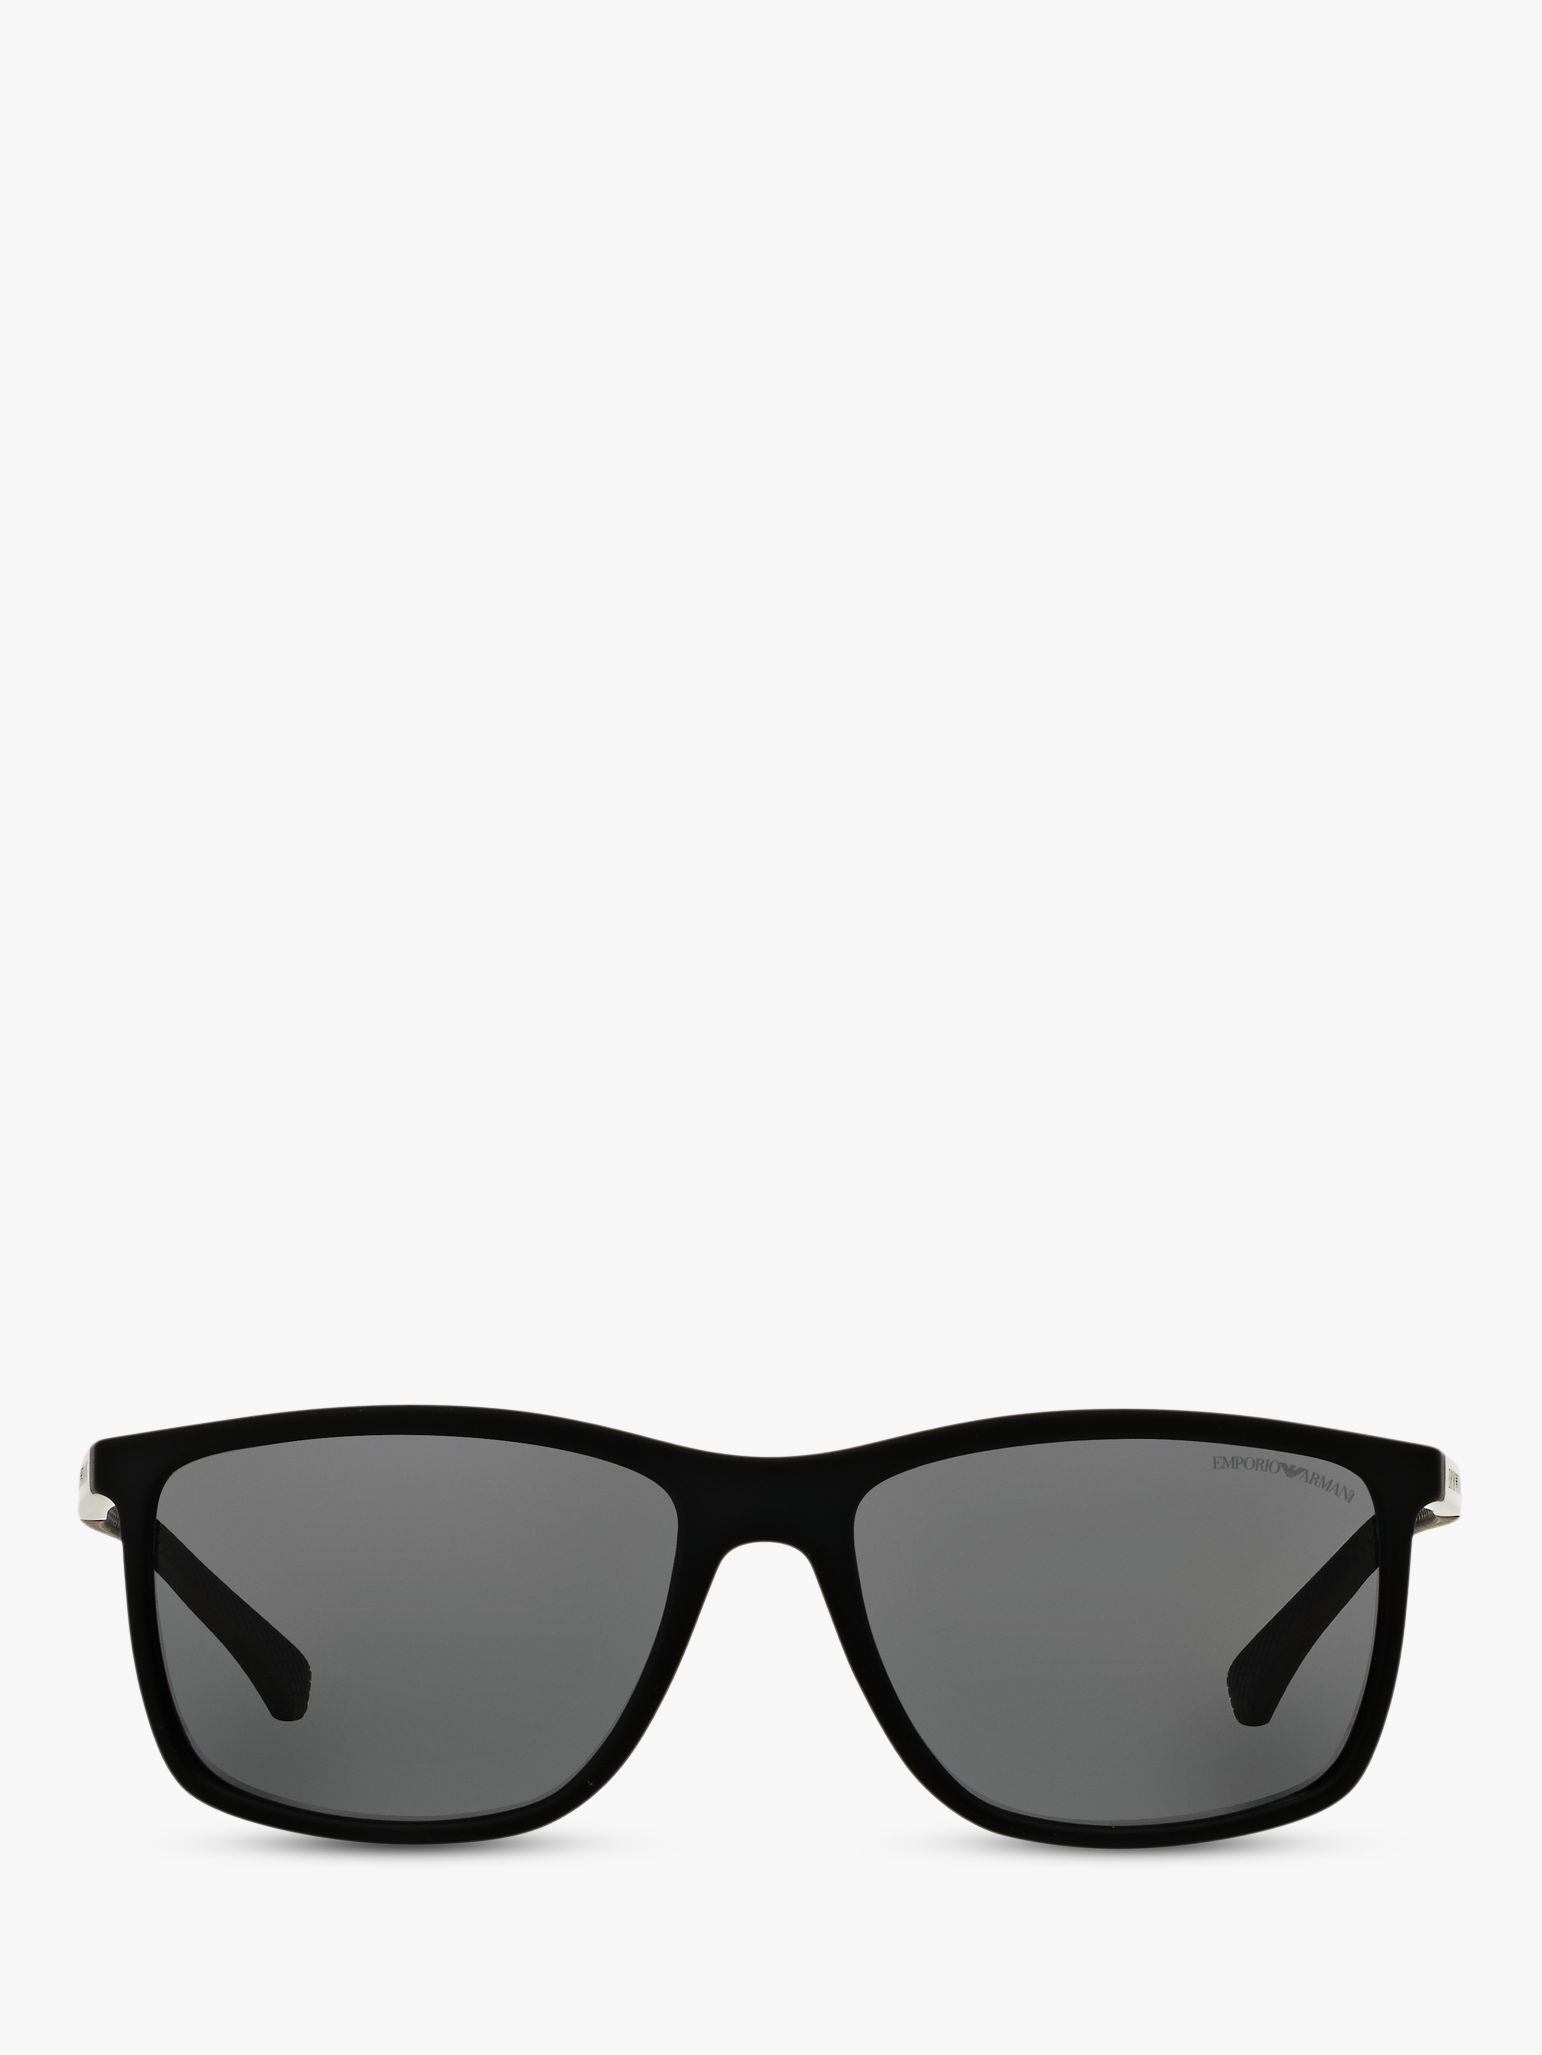 Emporio Armani EA4058 Women's Polarised Rectangular Sunglasses, Matte Black/Grey